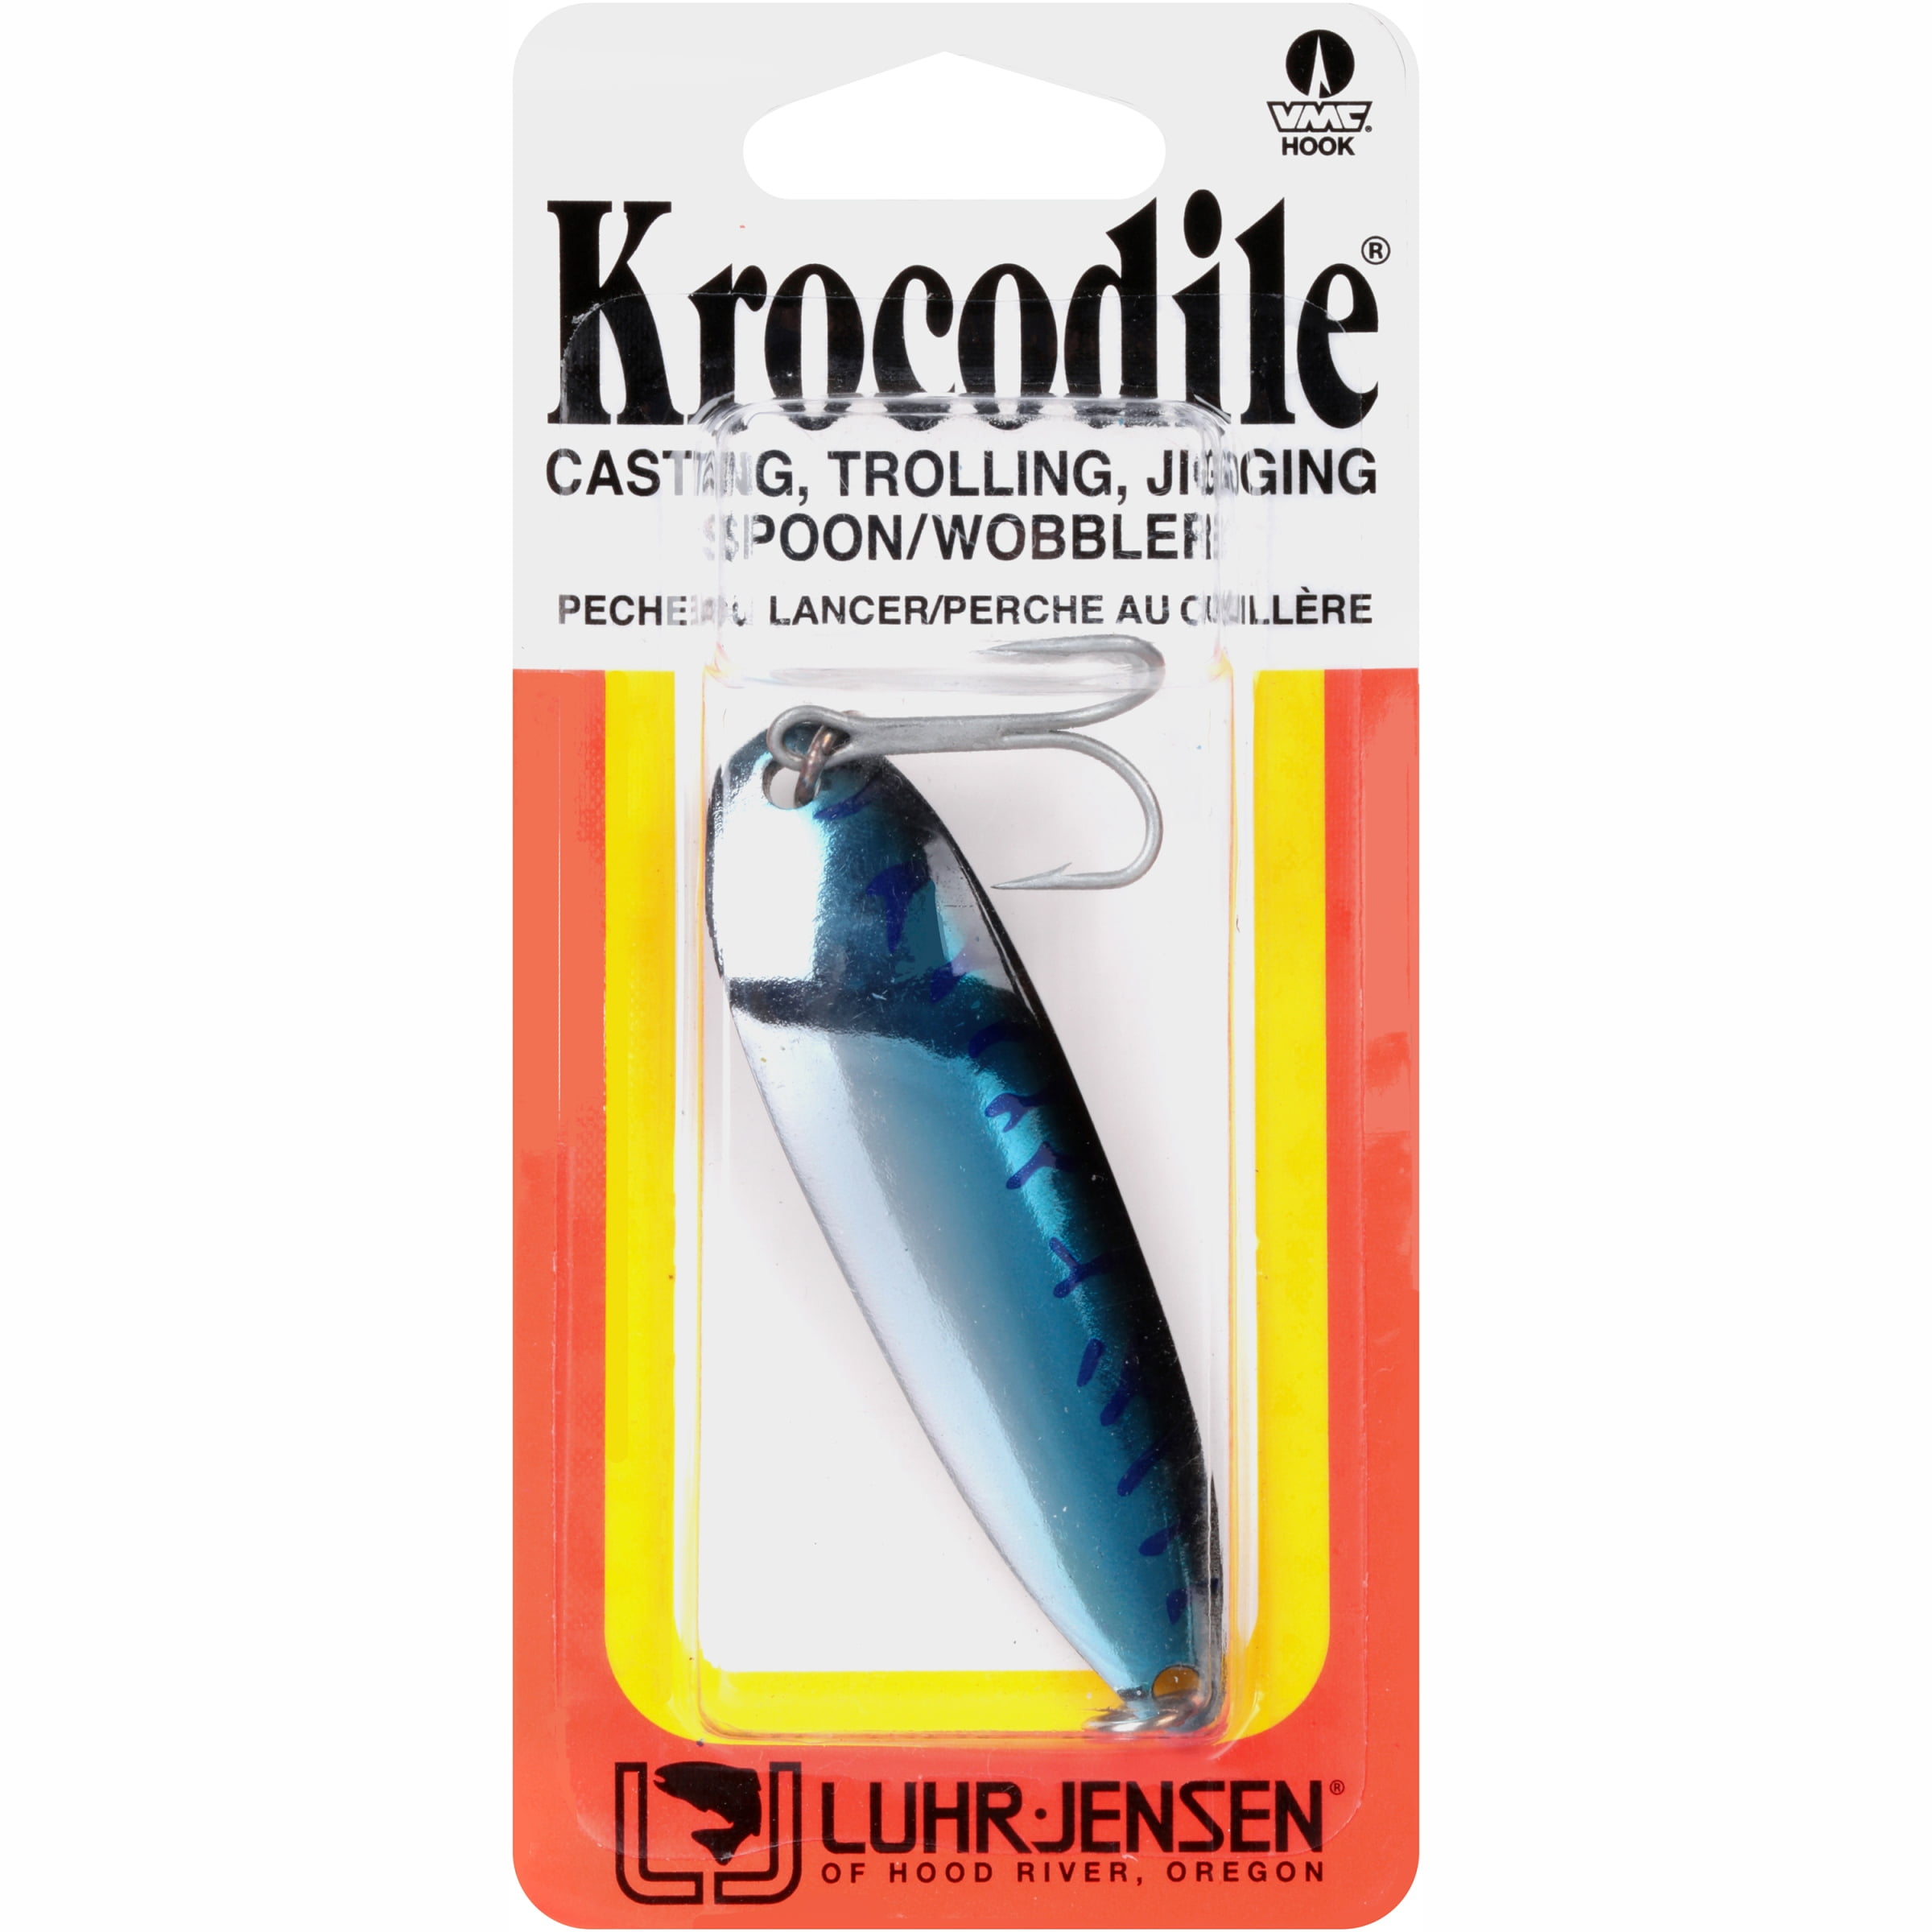 Luhr Jensen Krocodile 1oz Spoon Fishing Lure 3 5/16 Chrome/Blue Mackerel 